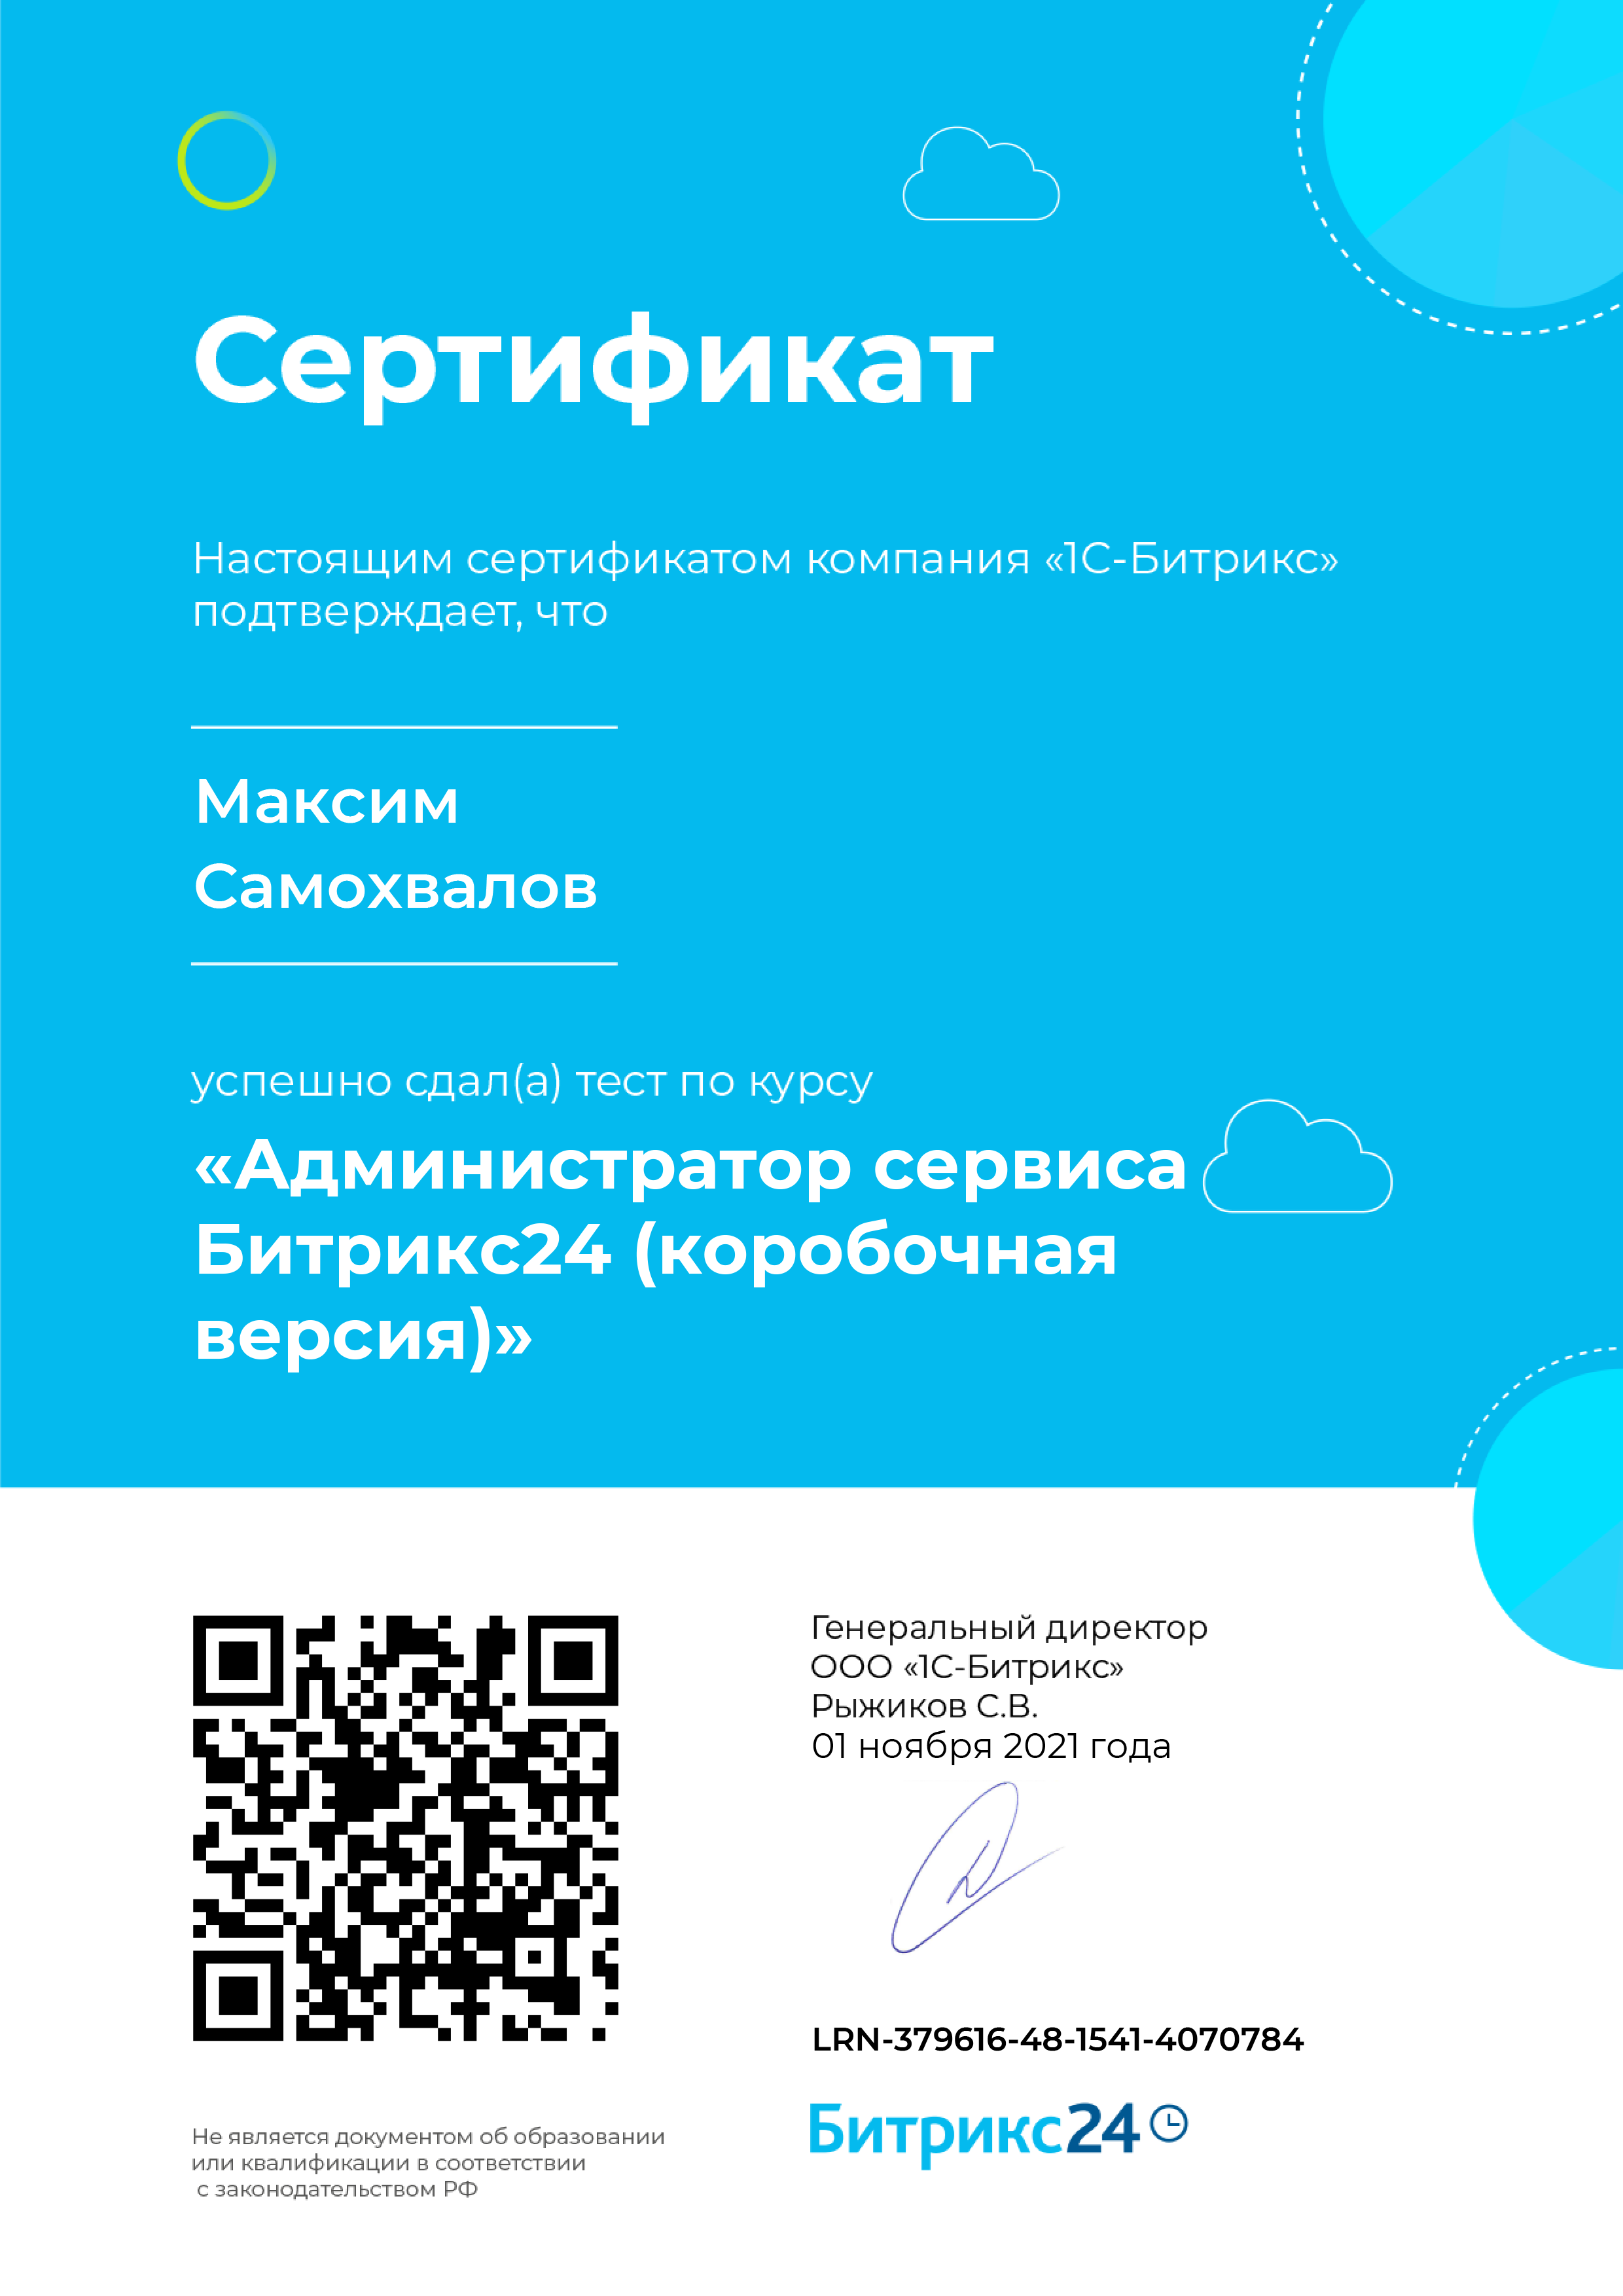 Сертификат Битрикс-24